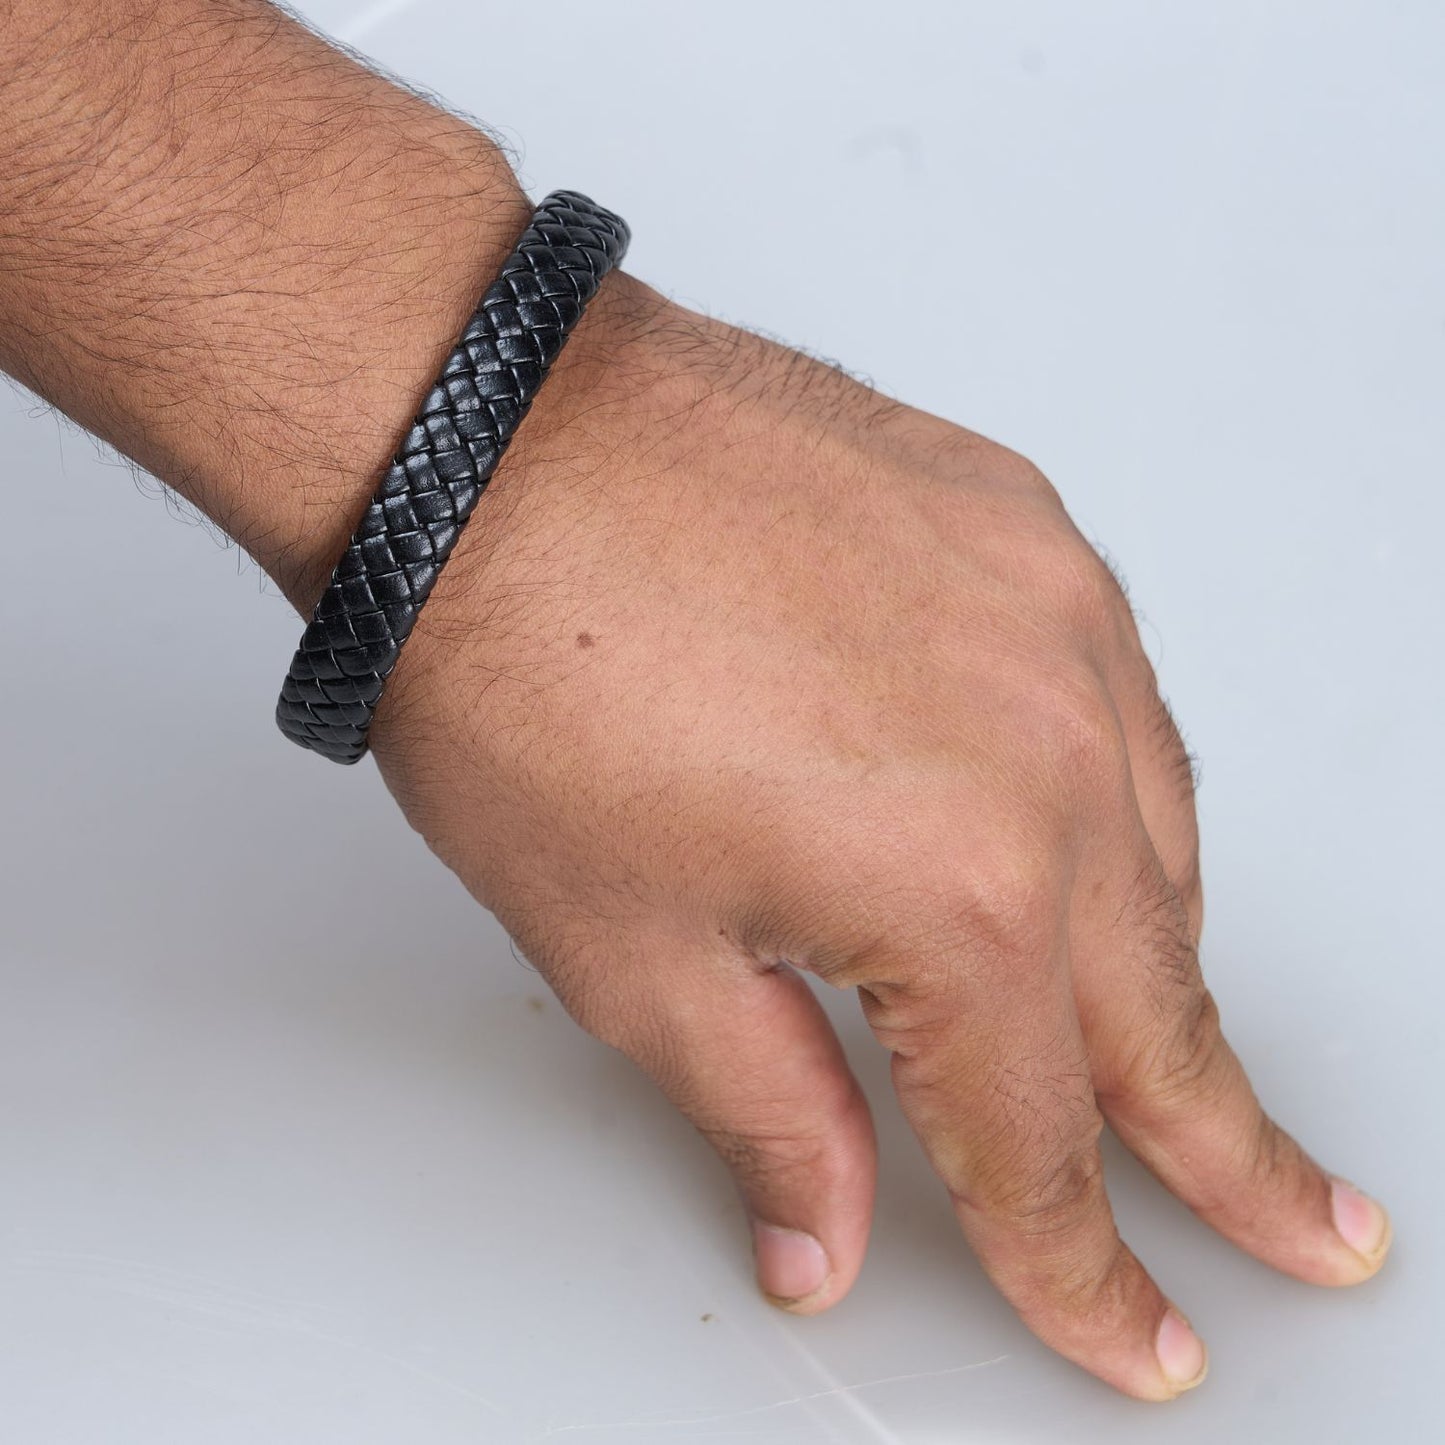 Display of Black color, snake patterned Bracelet for men, with magnetic clasp on a hand.